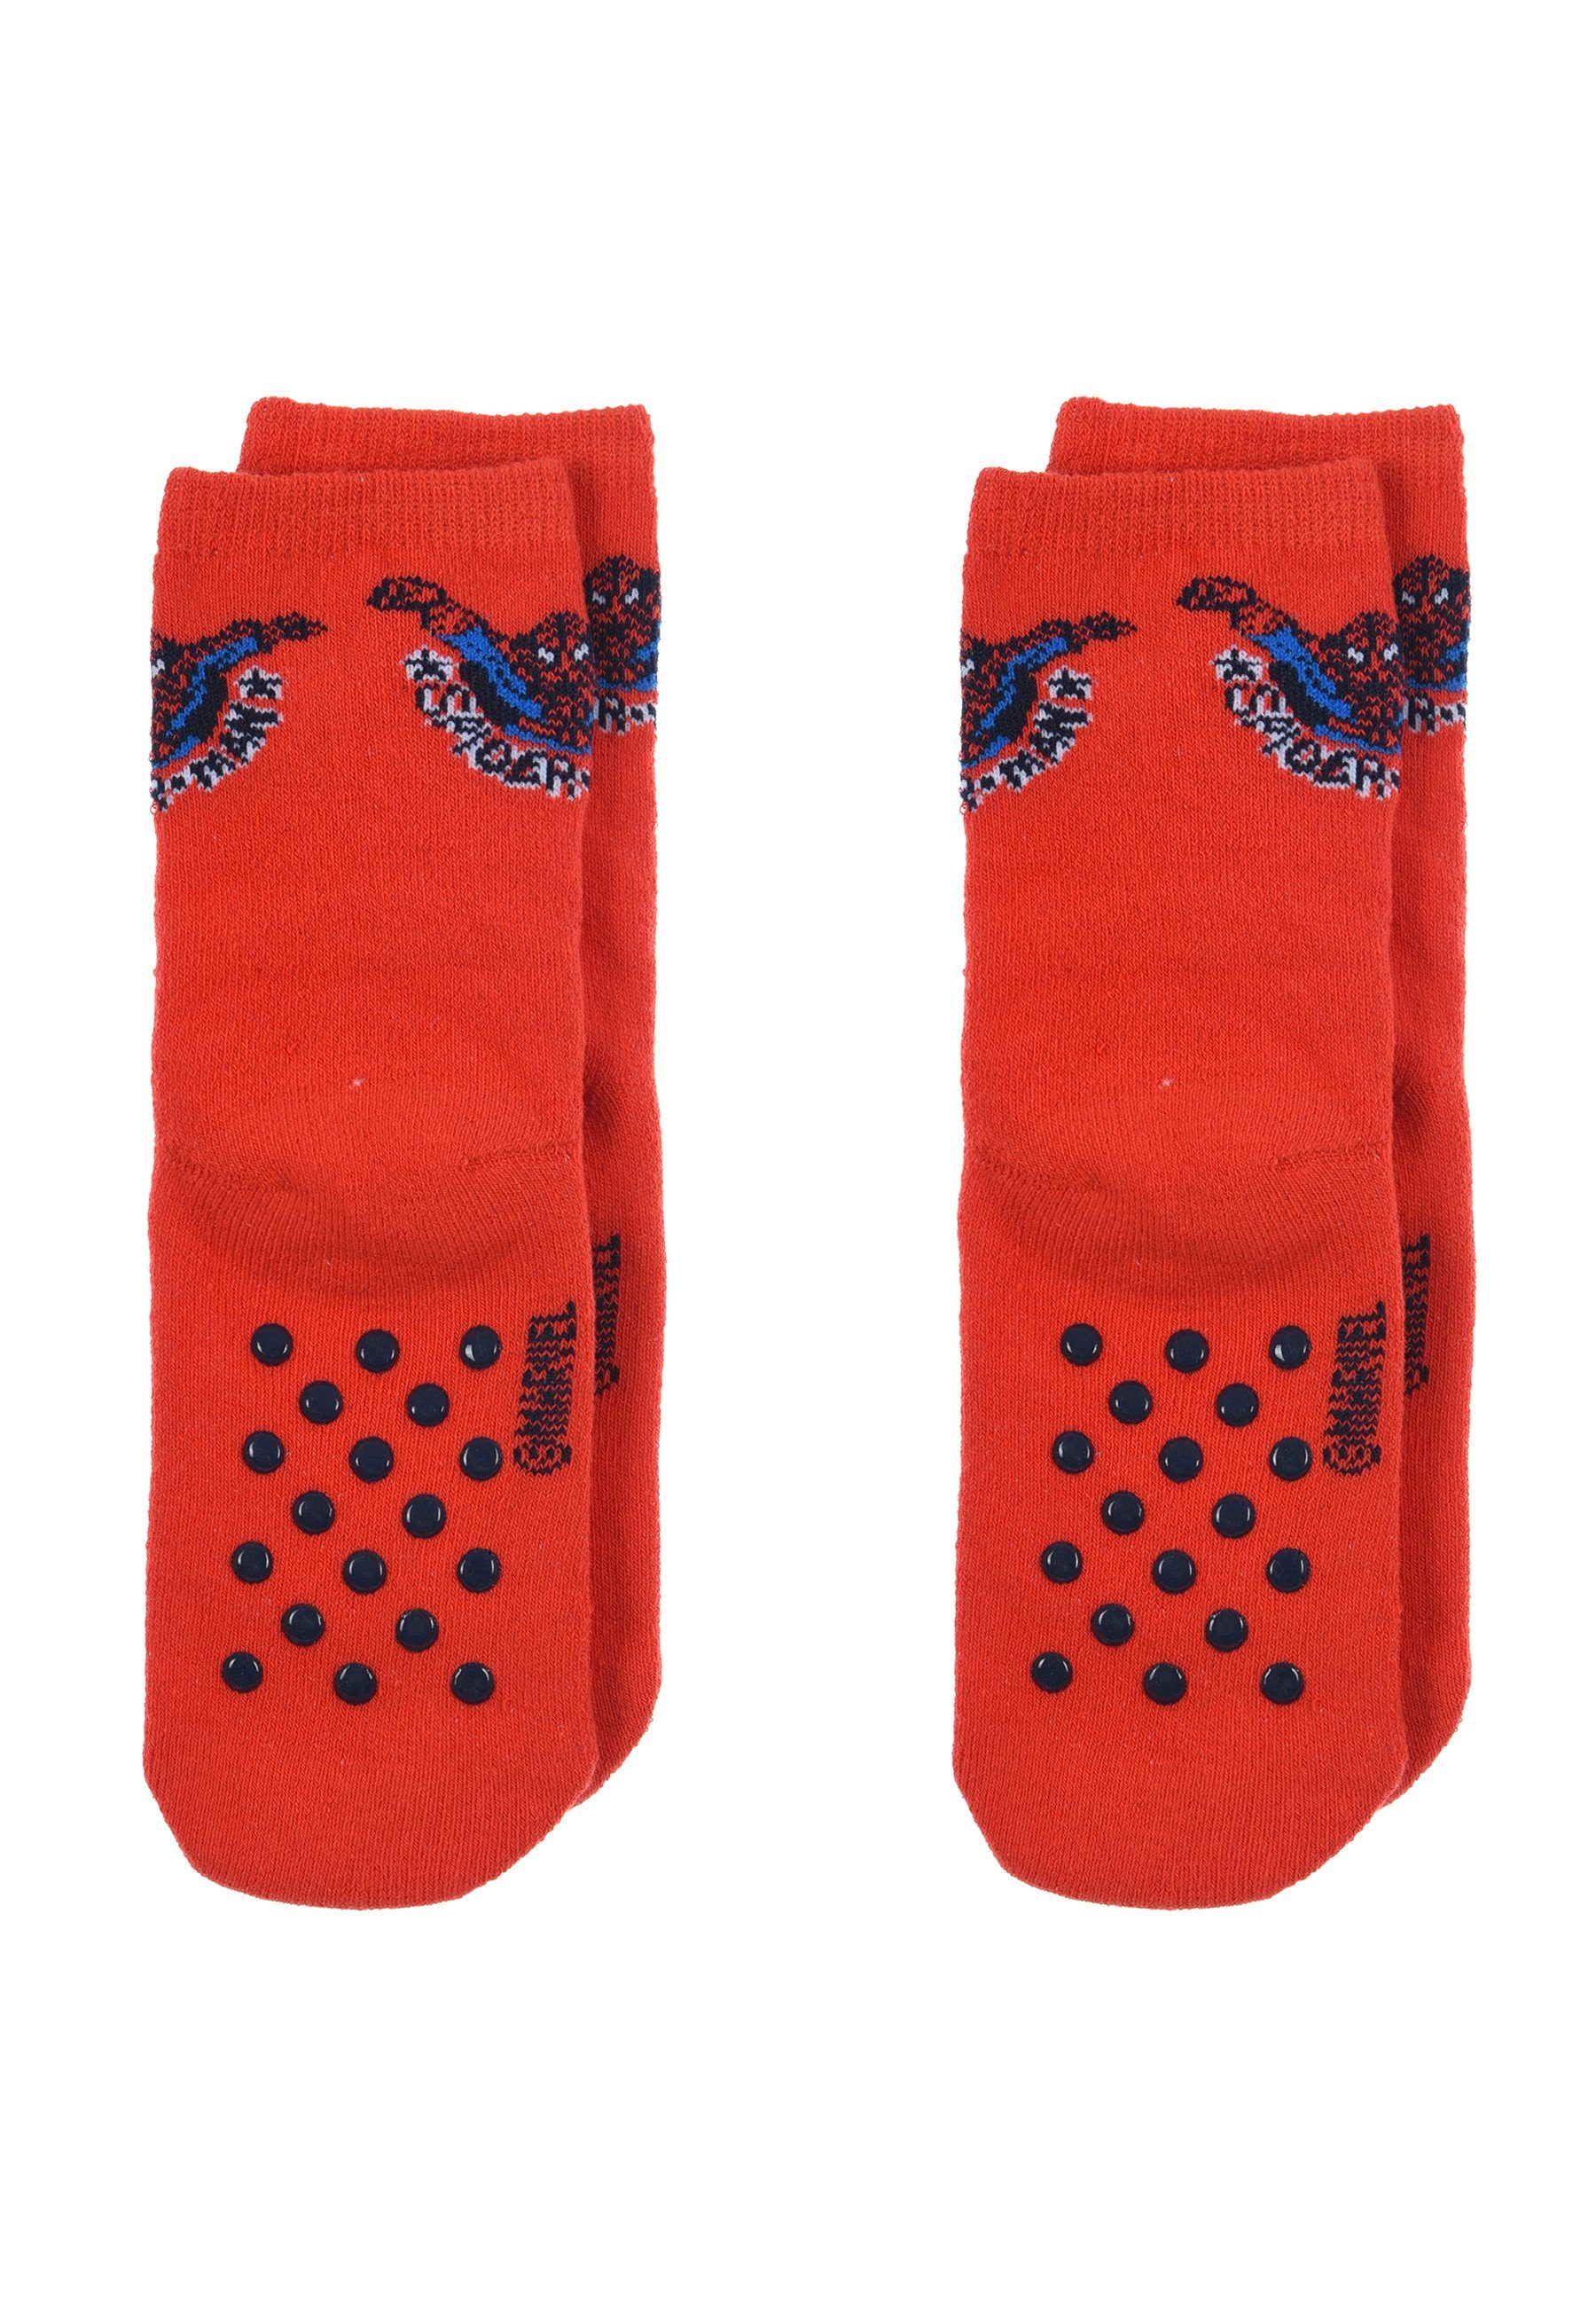 Jungen Kinder Socken Strümpfe Spiderman mit Gumminoppen (2-Paar) ABS-Socken Noppen Set